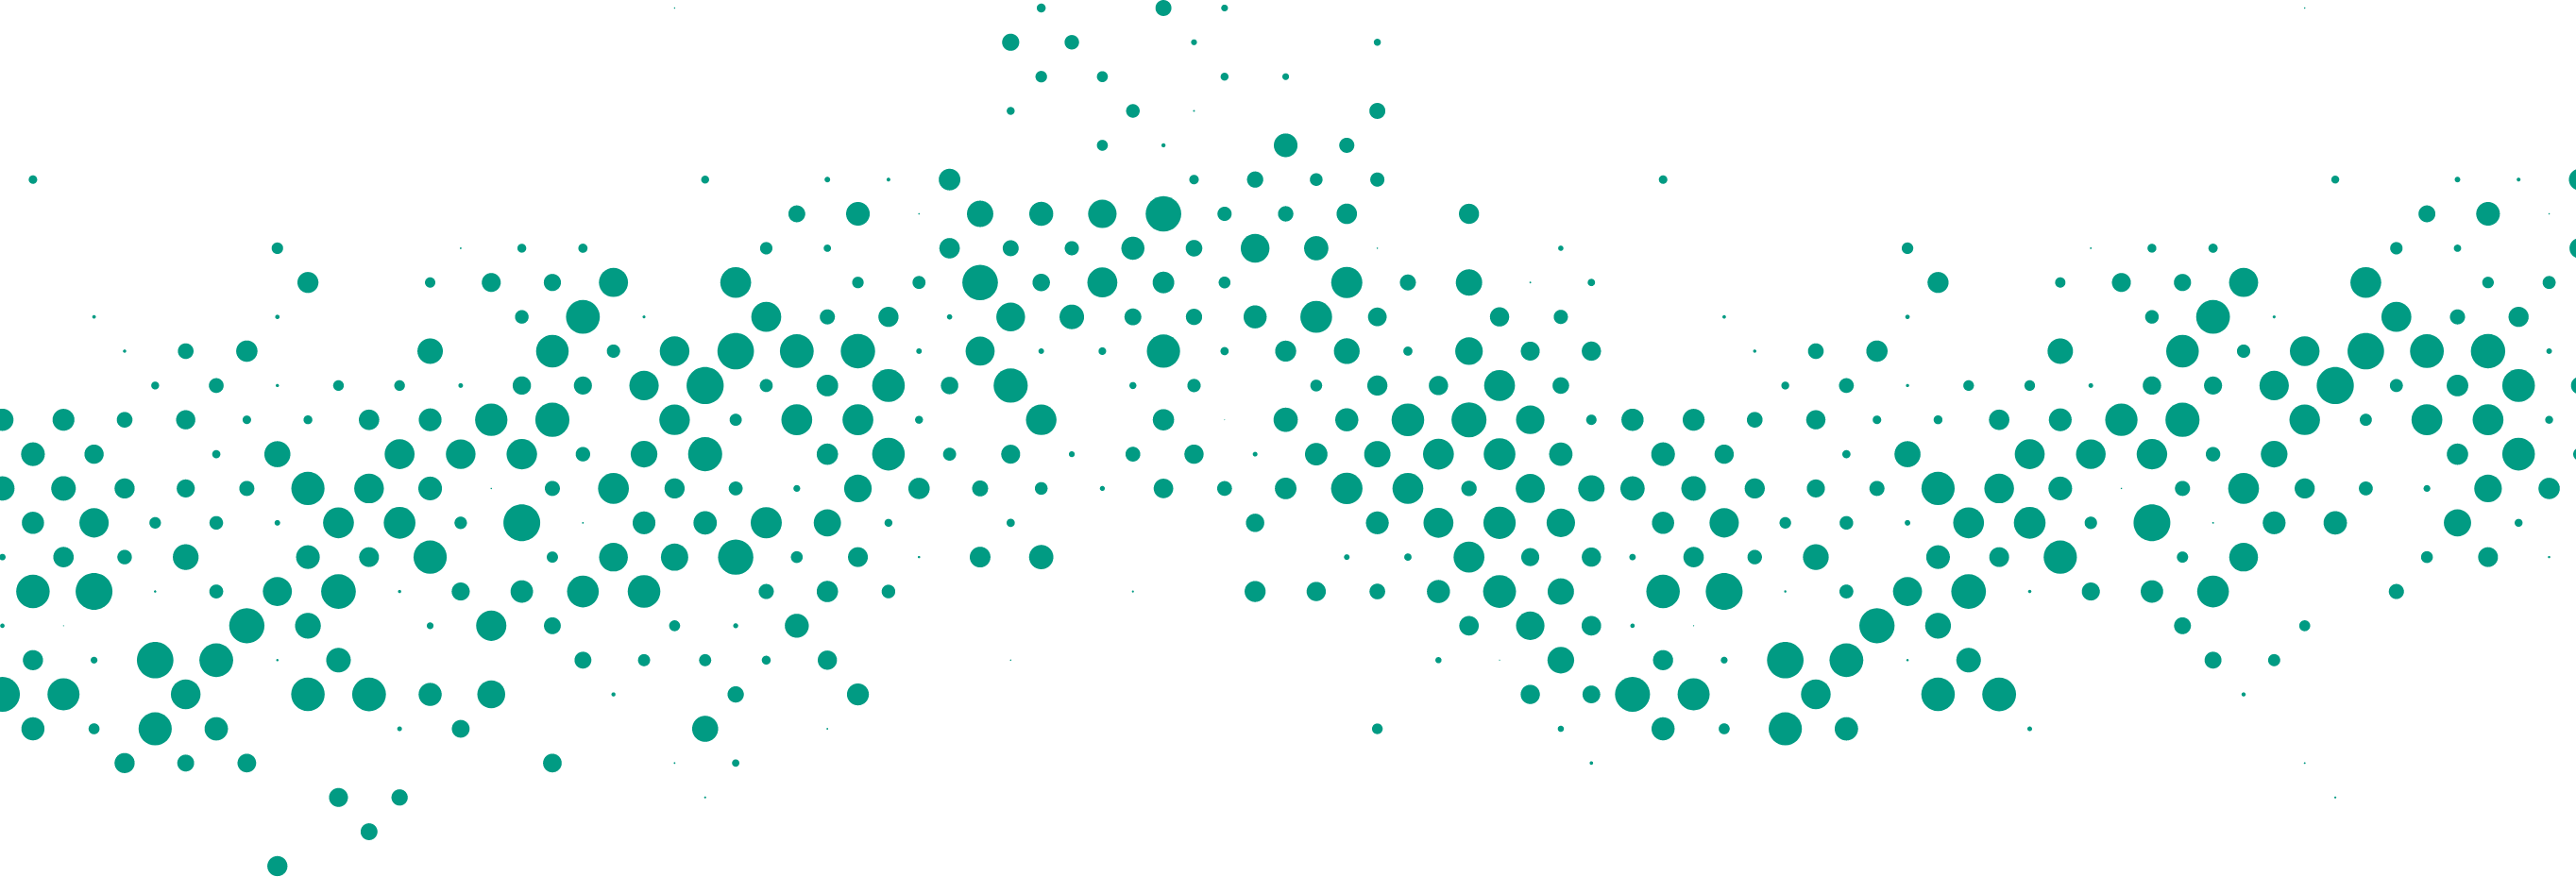 a pattern of random dots